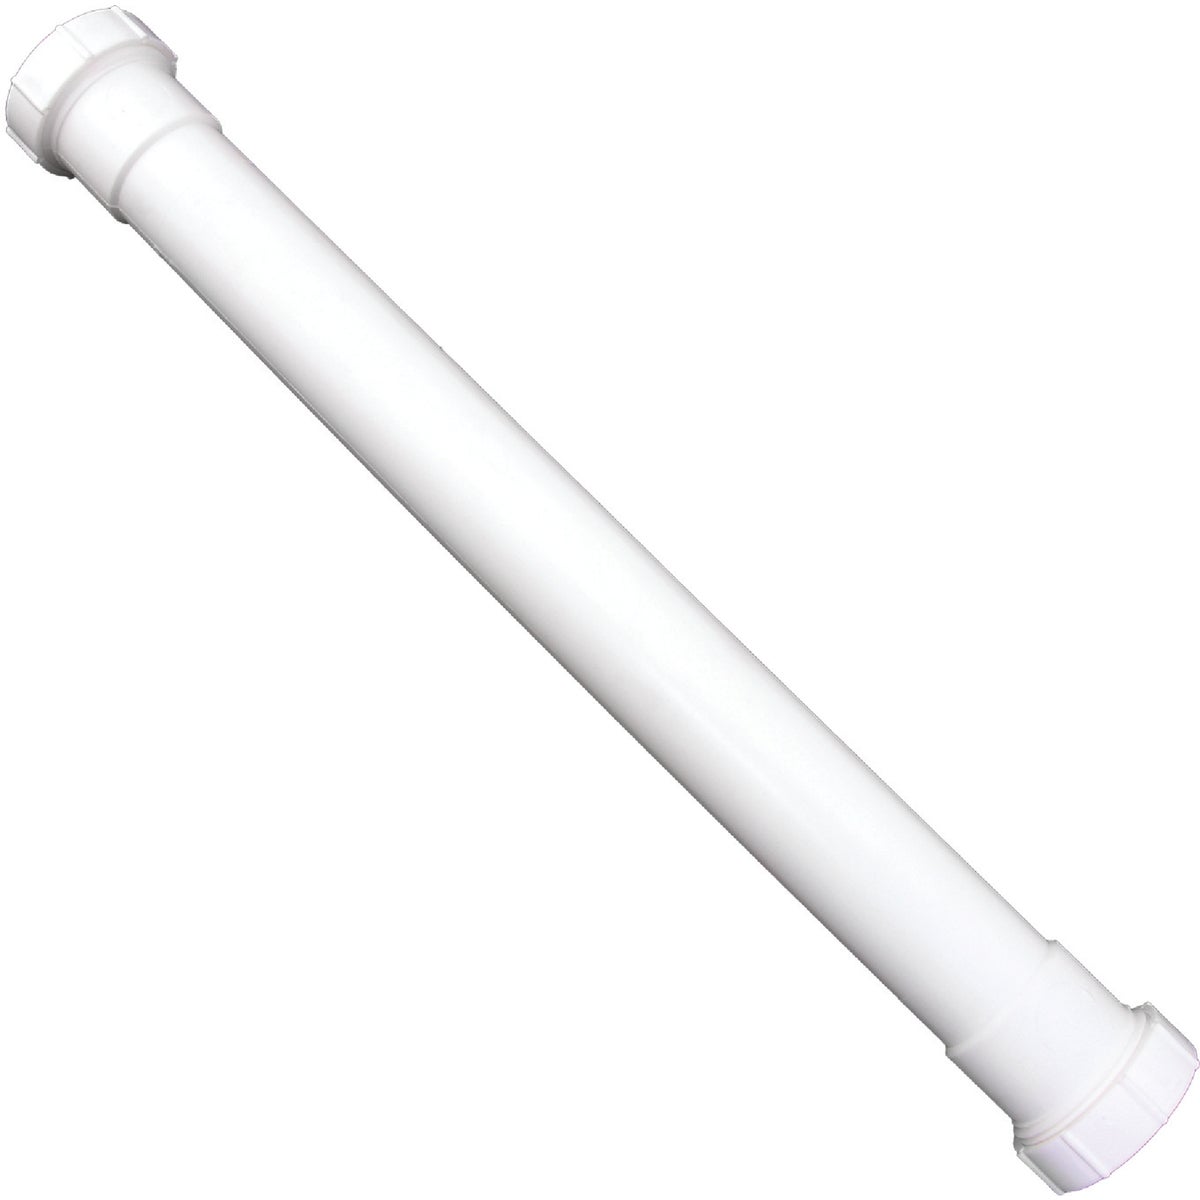 Lasco 1-1/2 In. OD x 16 In. L White Plastic Double-End Extension Tube